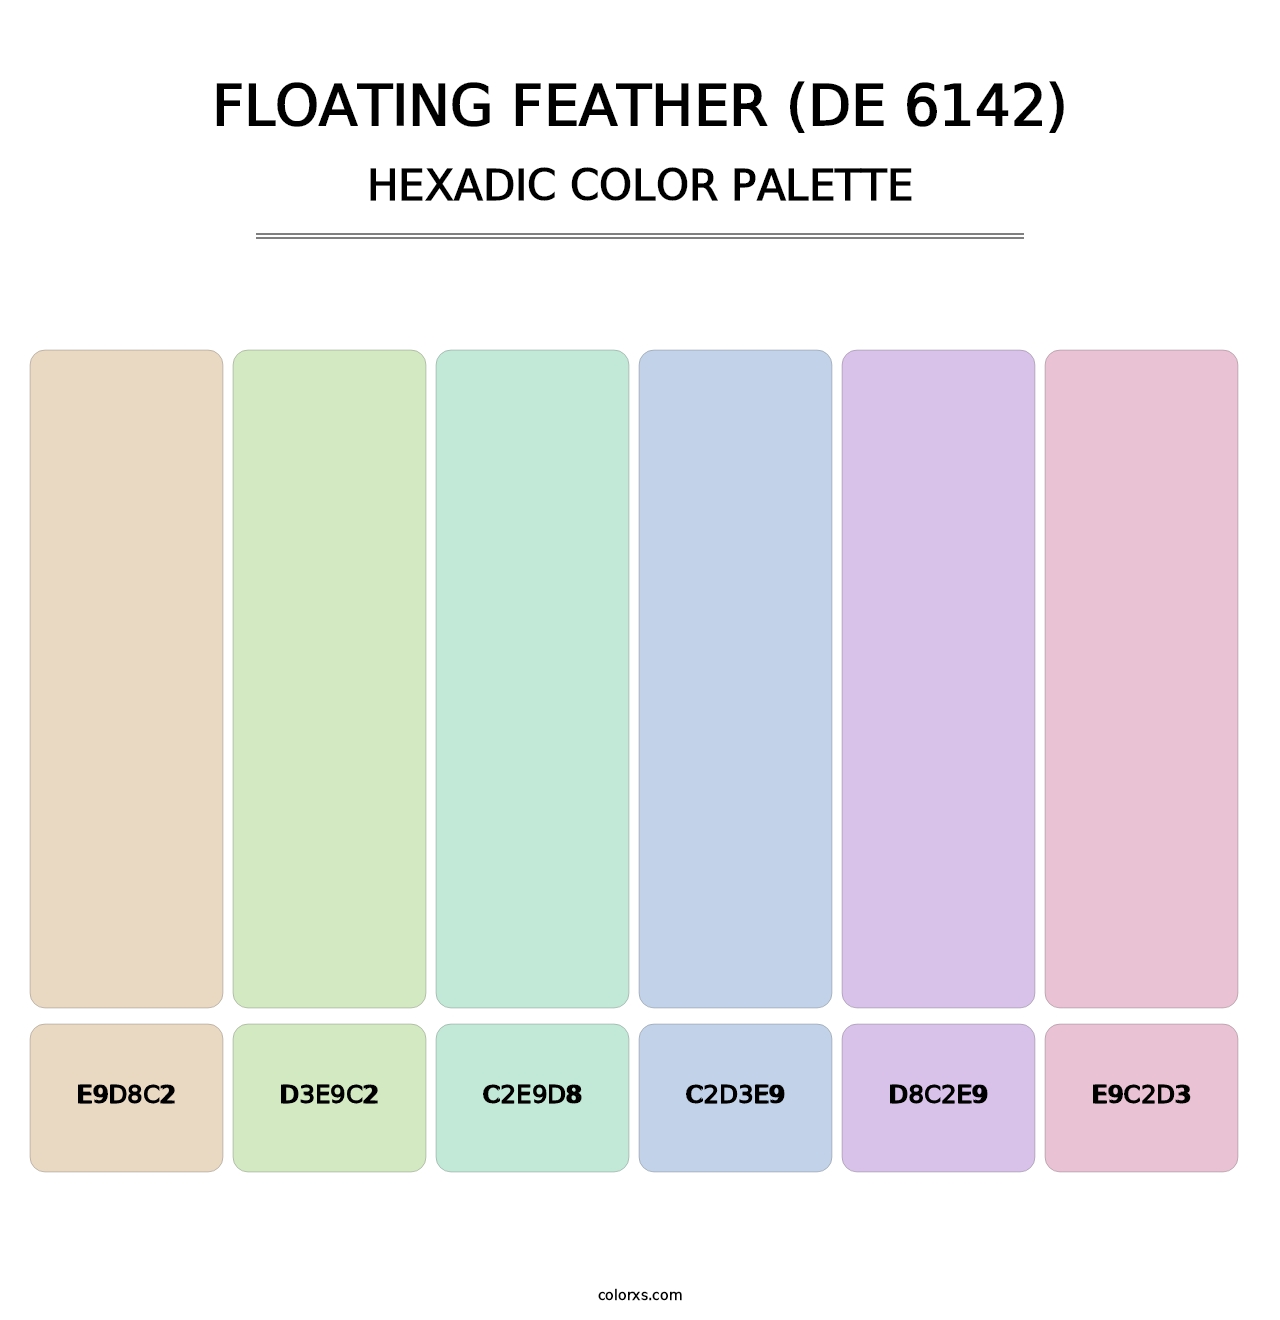 Floating Feather (DE 6142) - Hexadic Color Palette